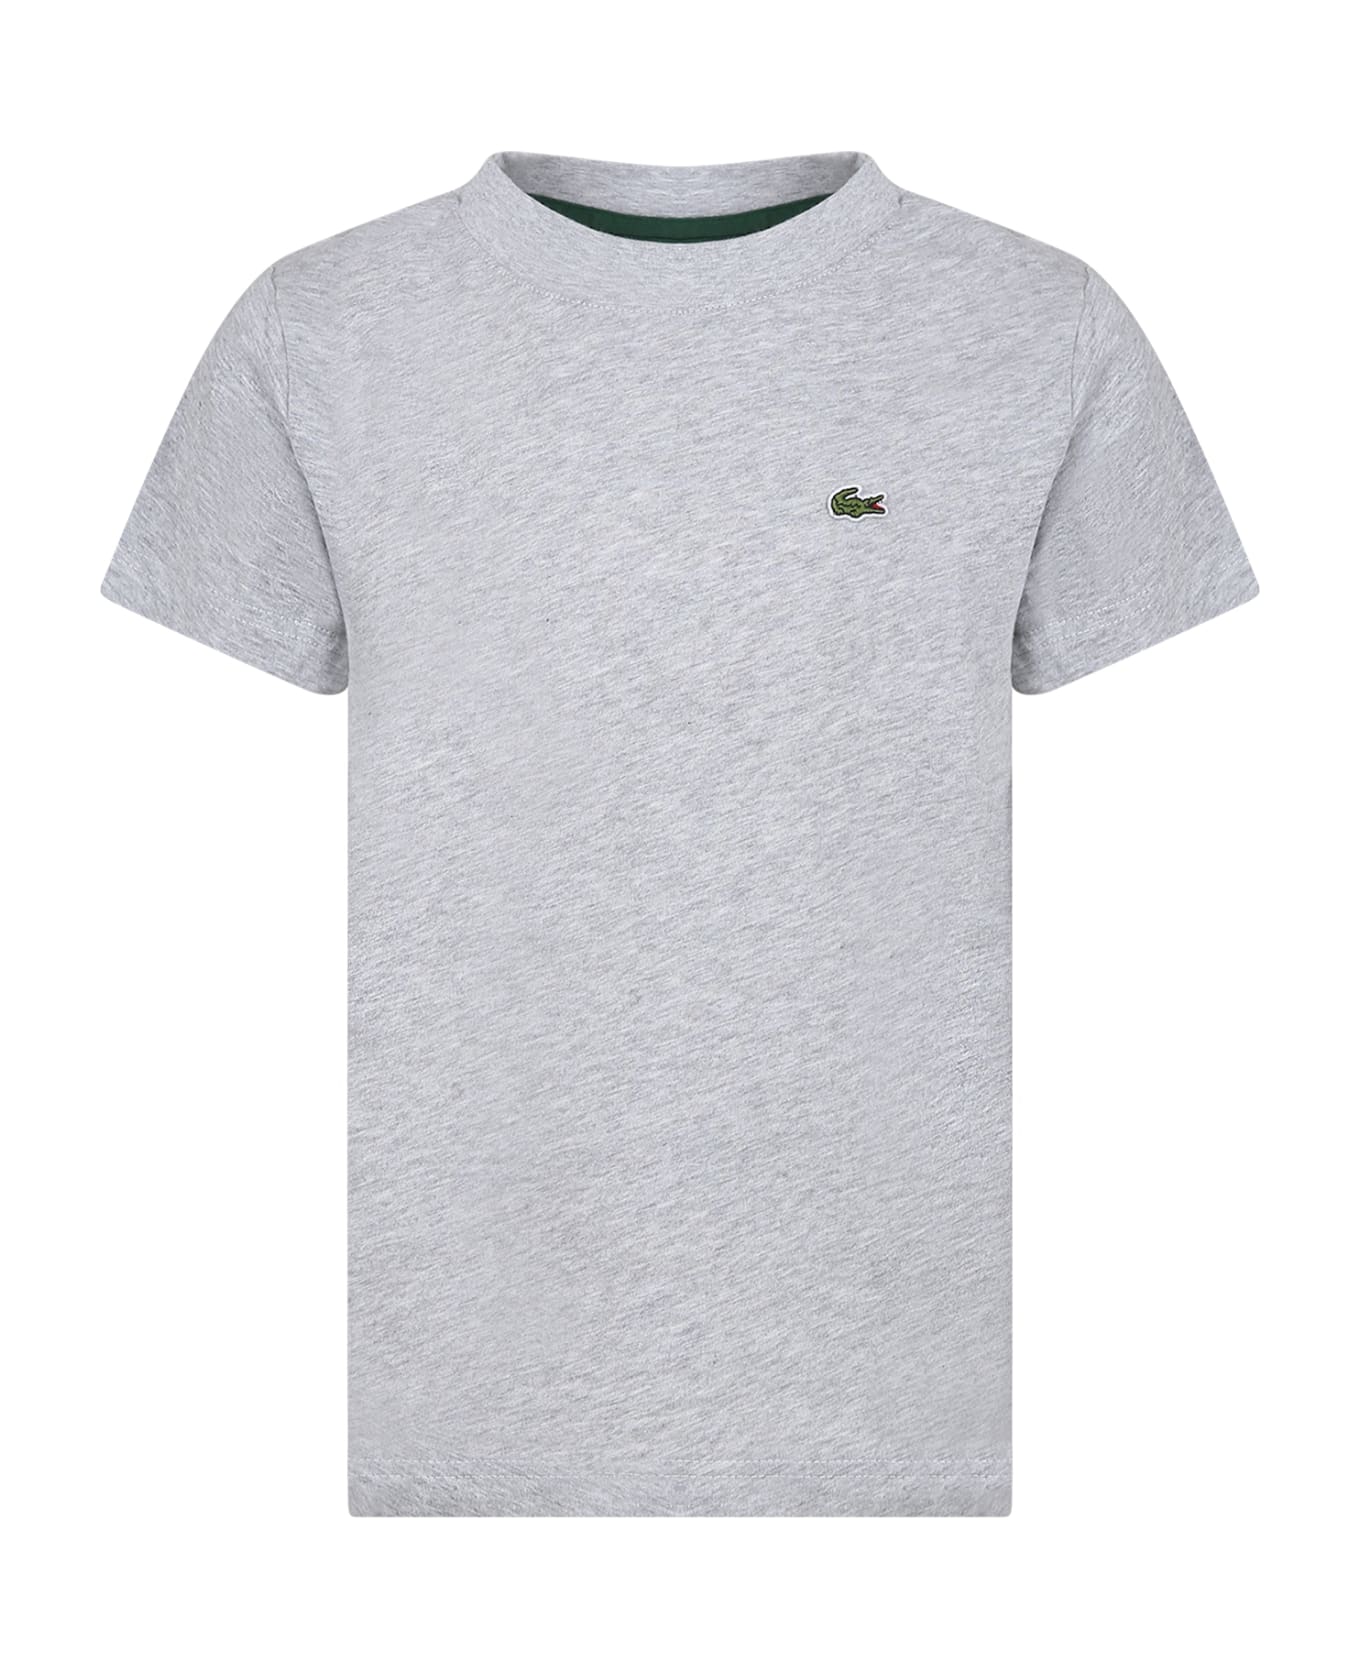 Lacoste Grey T-shirt For Boy With Crocodile - Grey